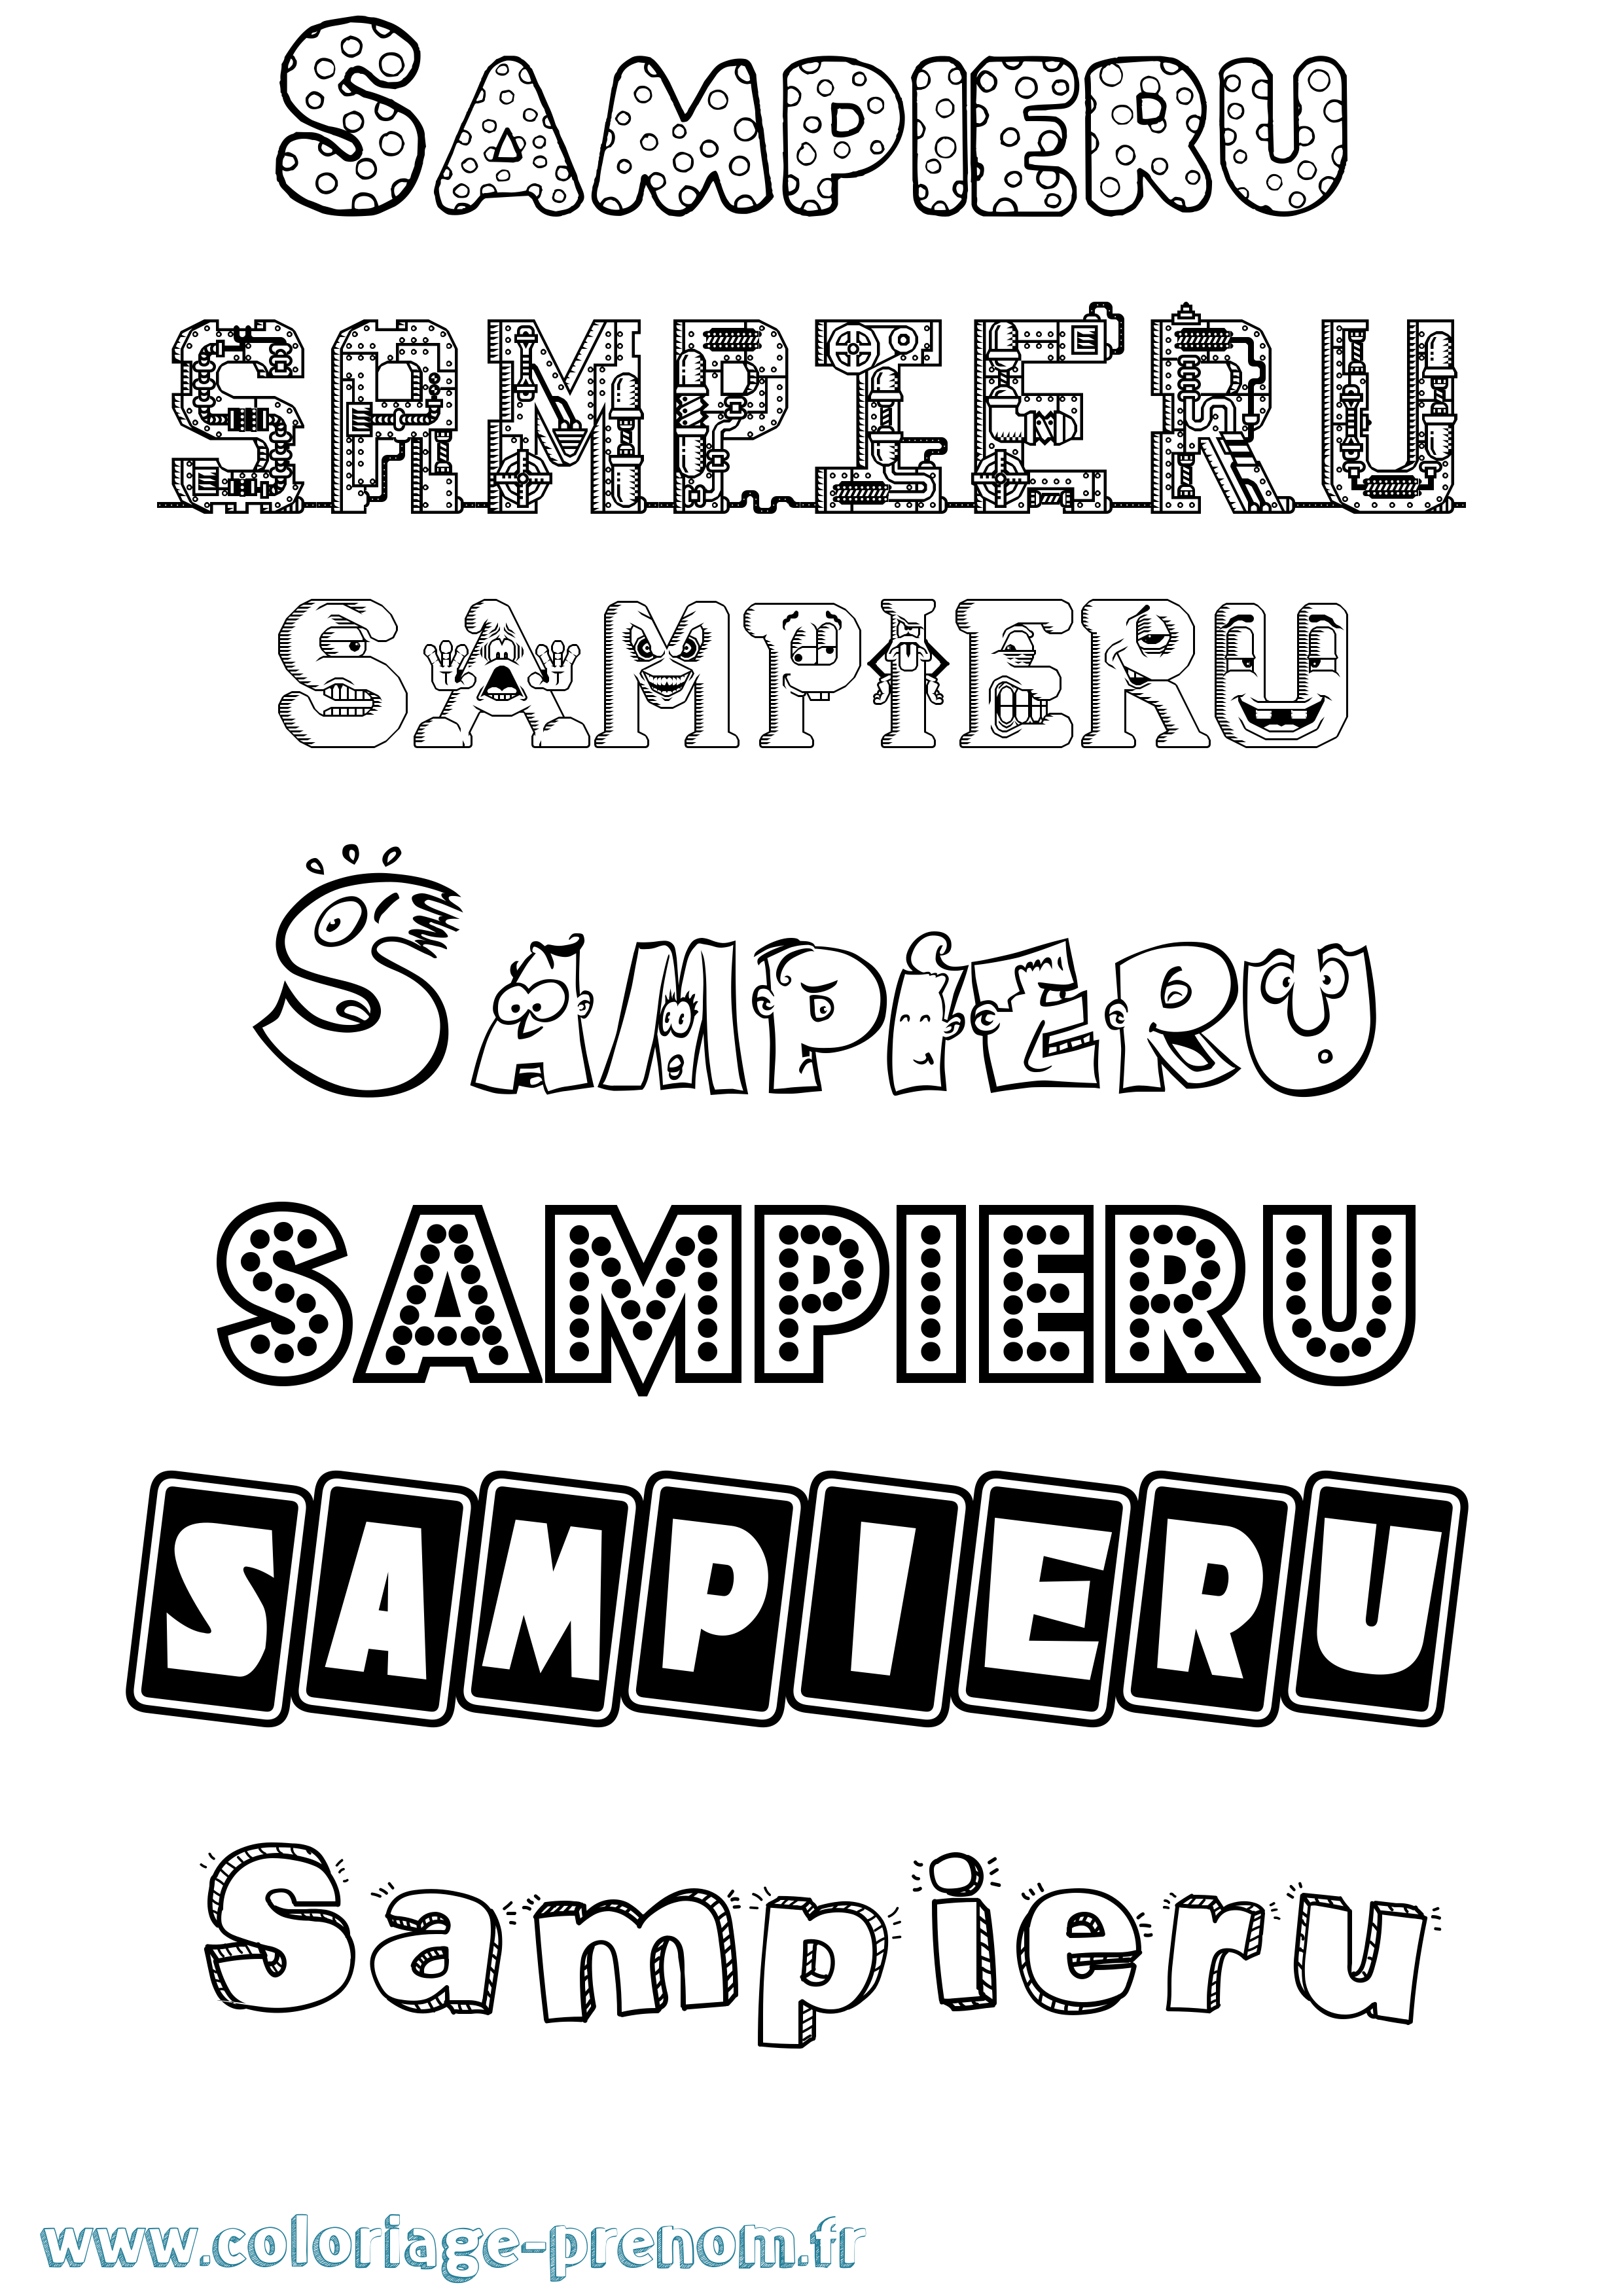 Coloriage prénom Sampieru Fun